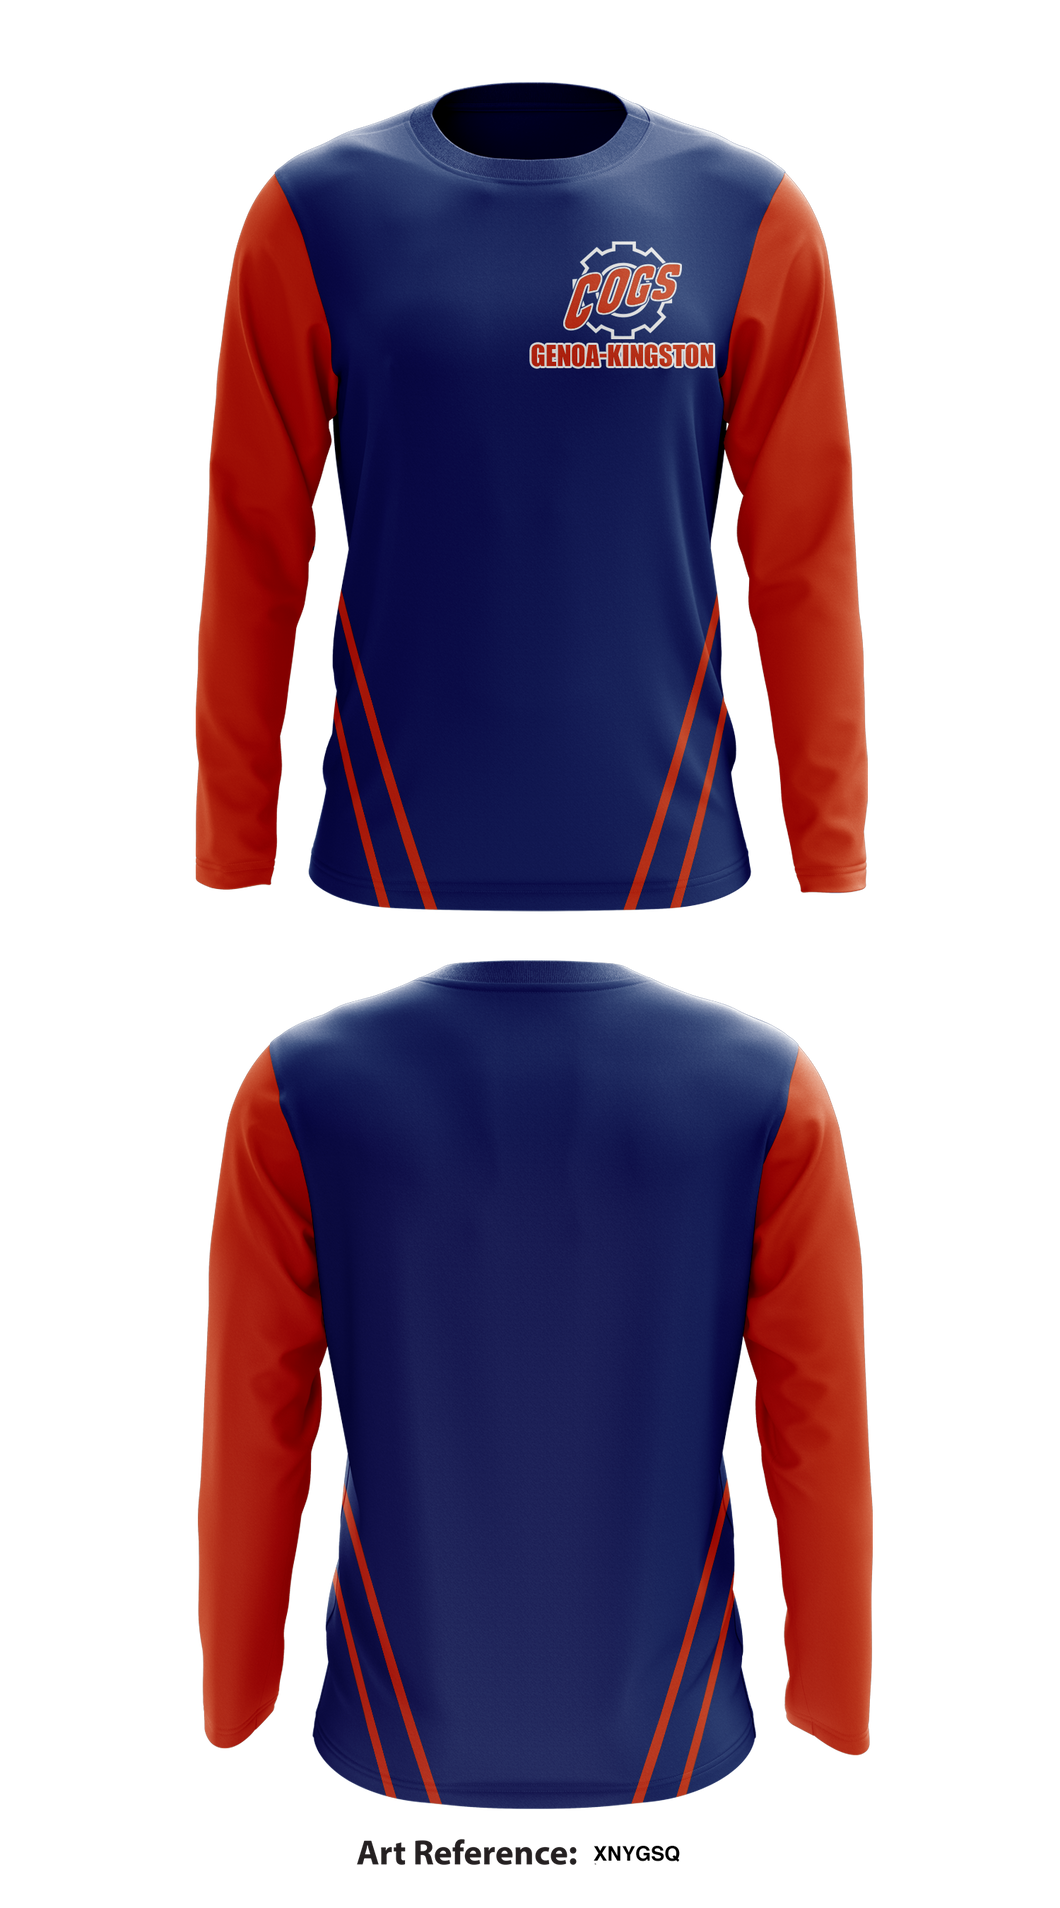 Genoa-Kingston track & field 45300590 Long Sleeve Performance Shirt - 1